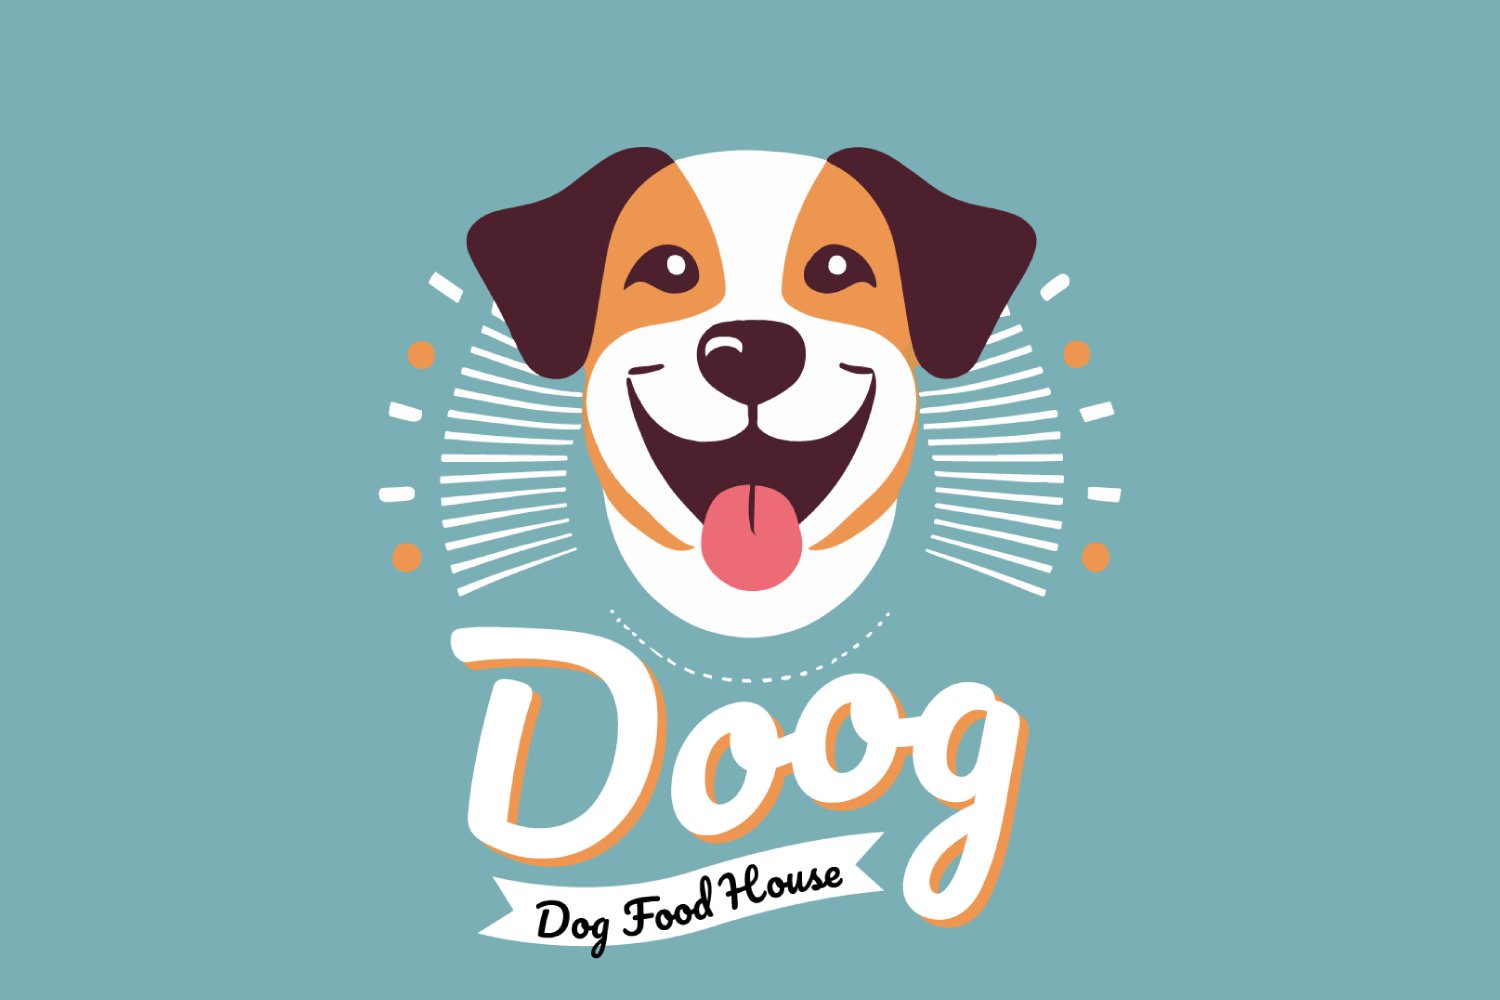 Logo Dog Food House cover image.